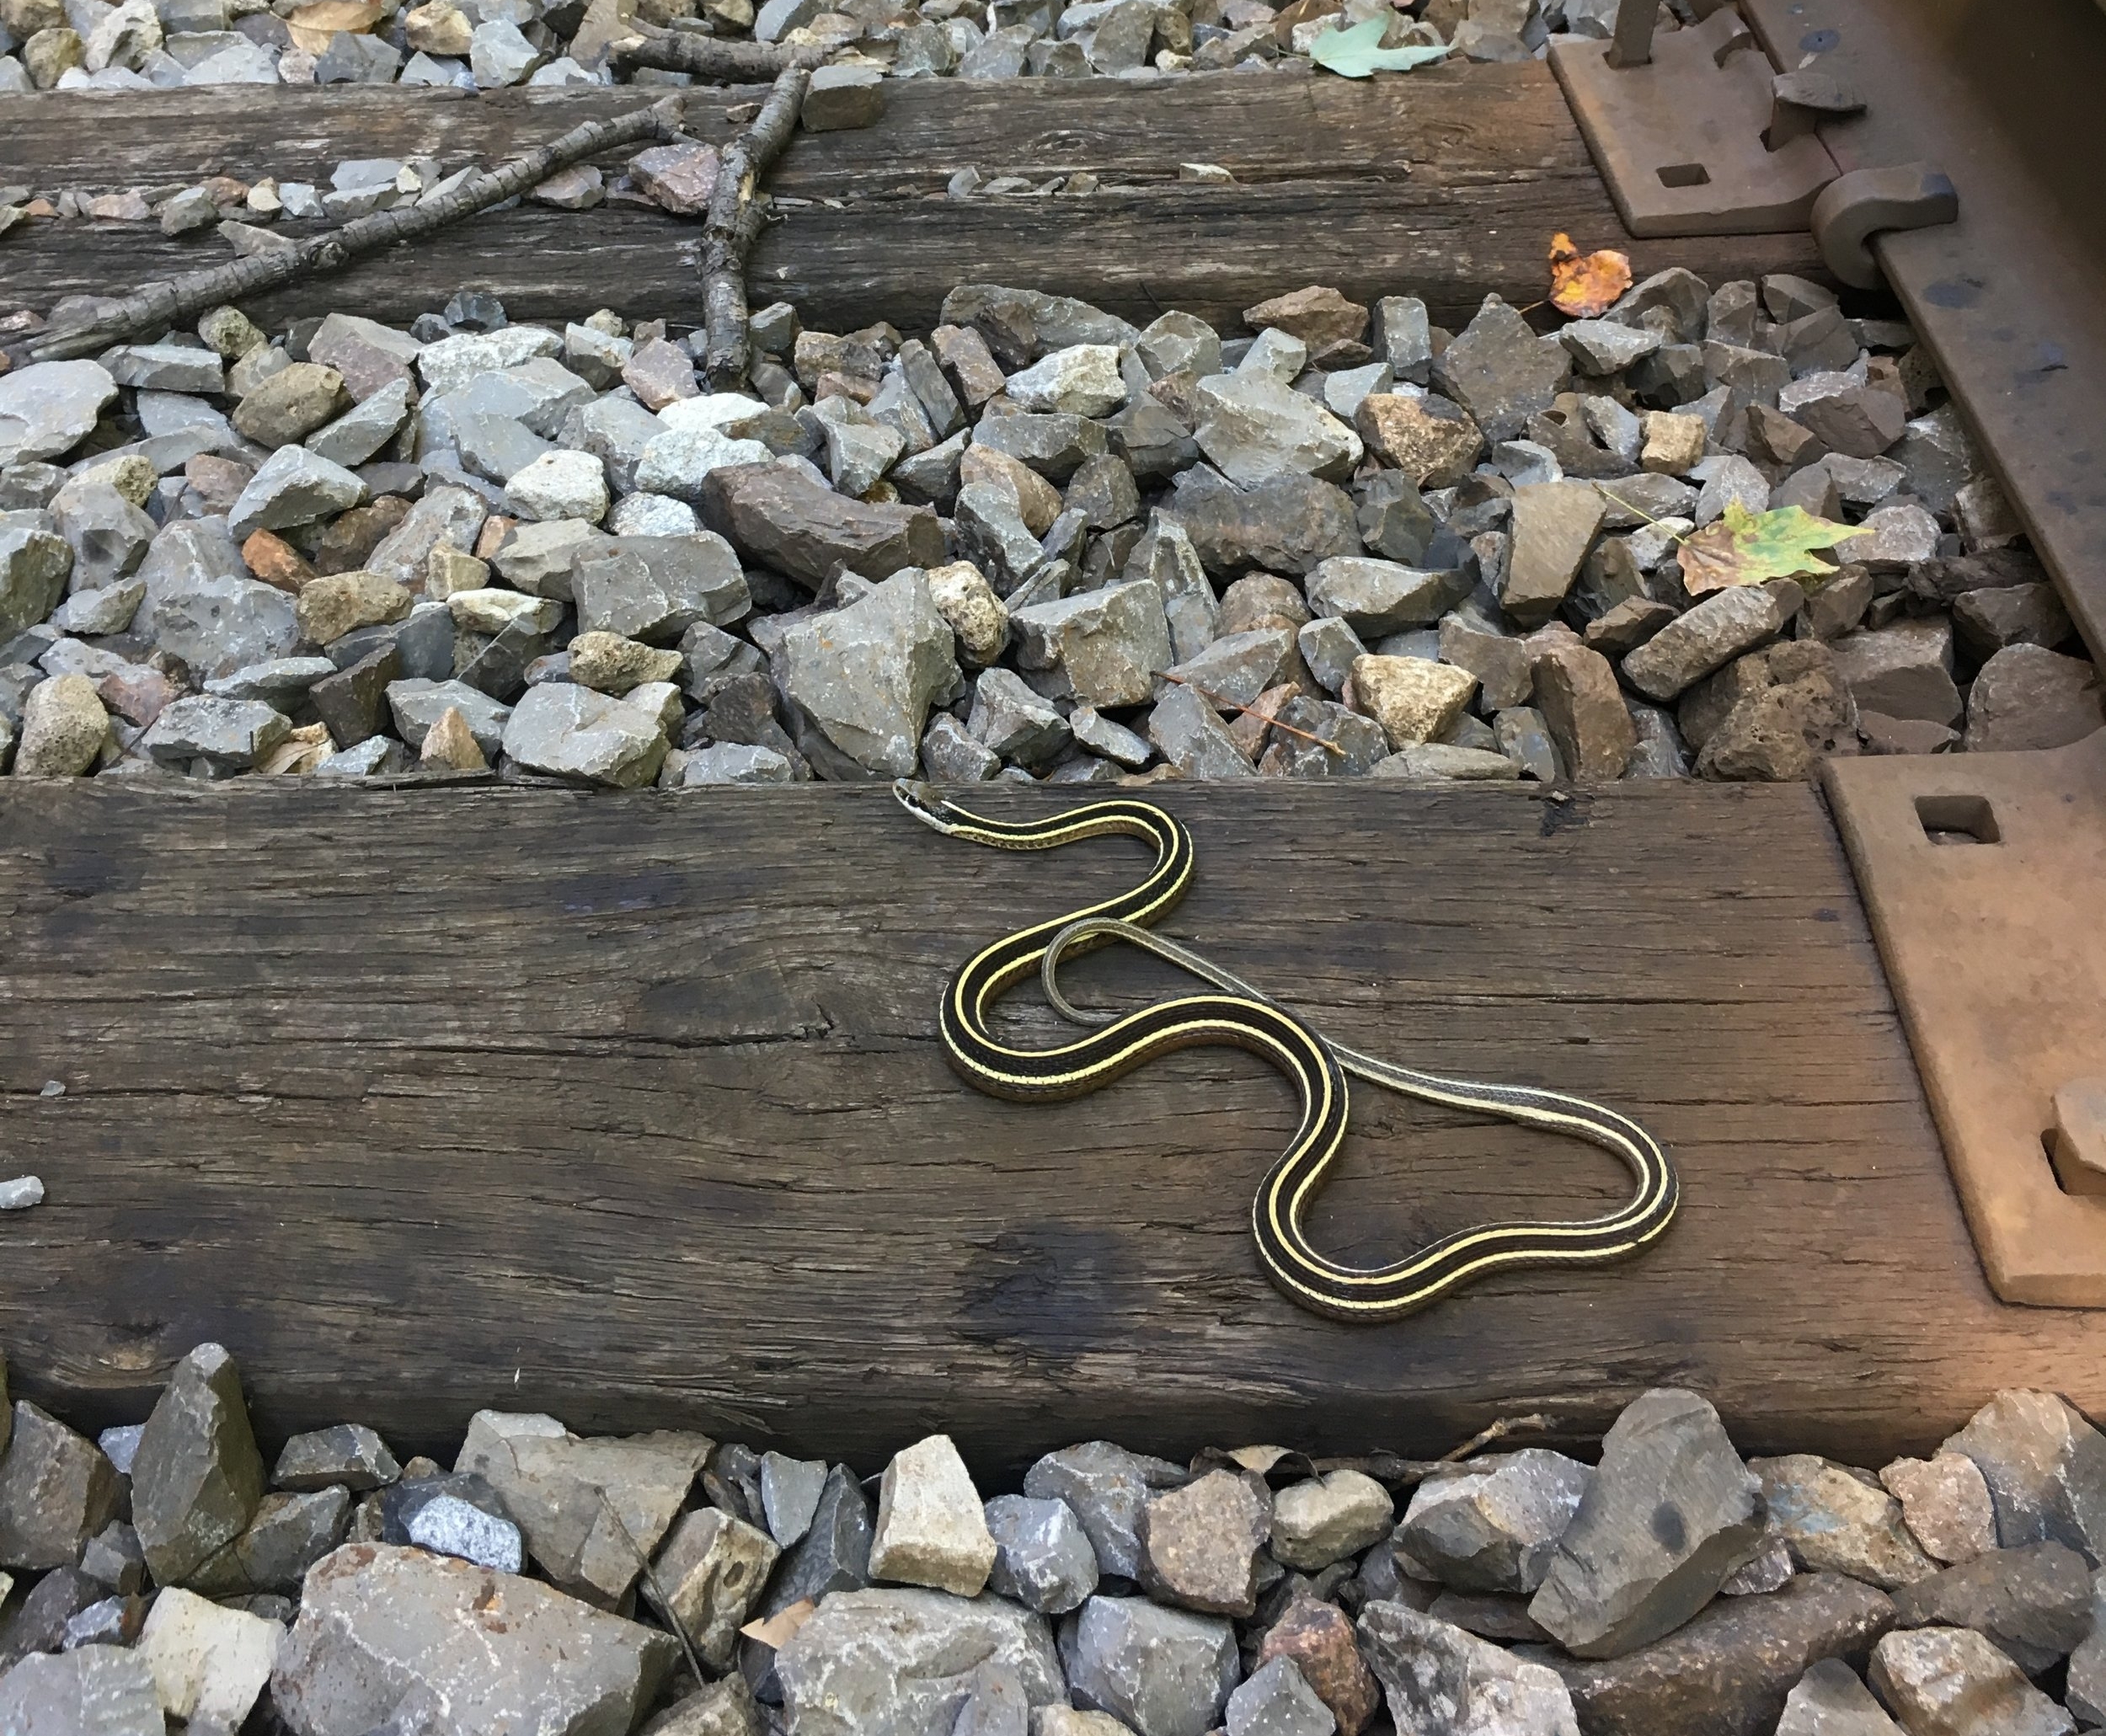 Eastern Ribbonsnake found along railroad tracks 